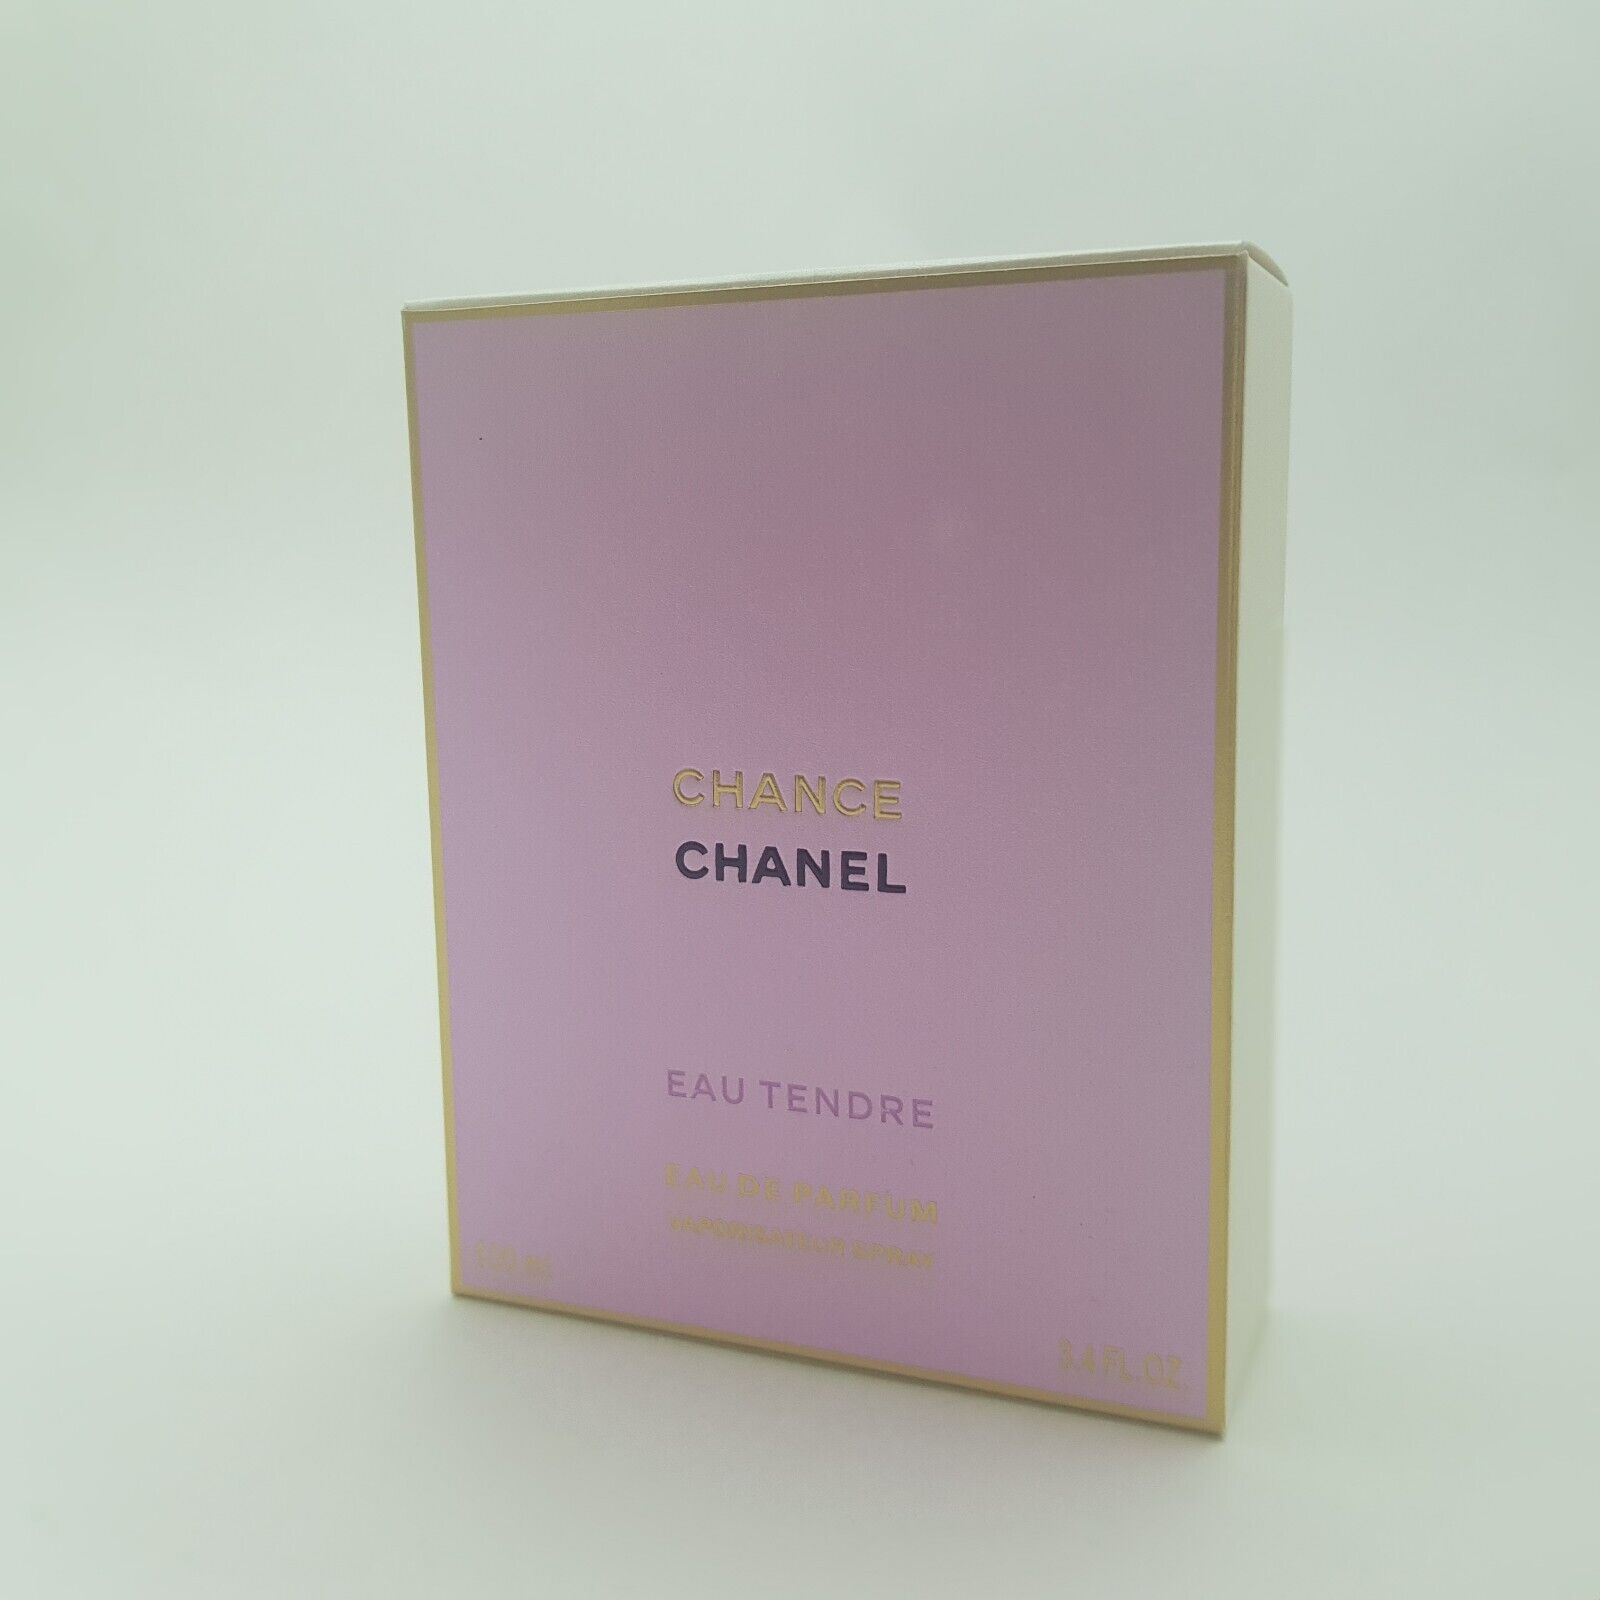 NEWChanel Chance Eau Tendre EDP Eau de Parfume Spray 3.4 Oz 100 Ml (Sealed Box)